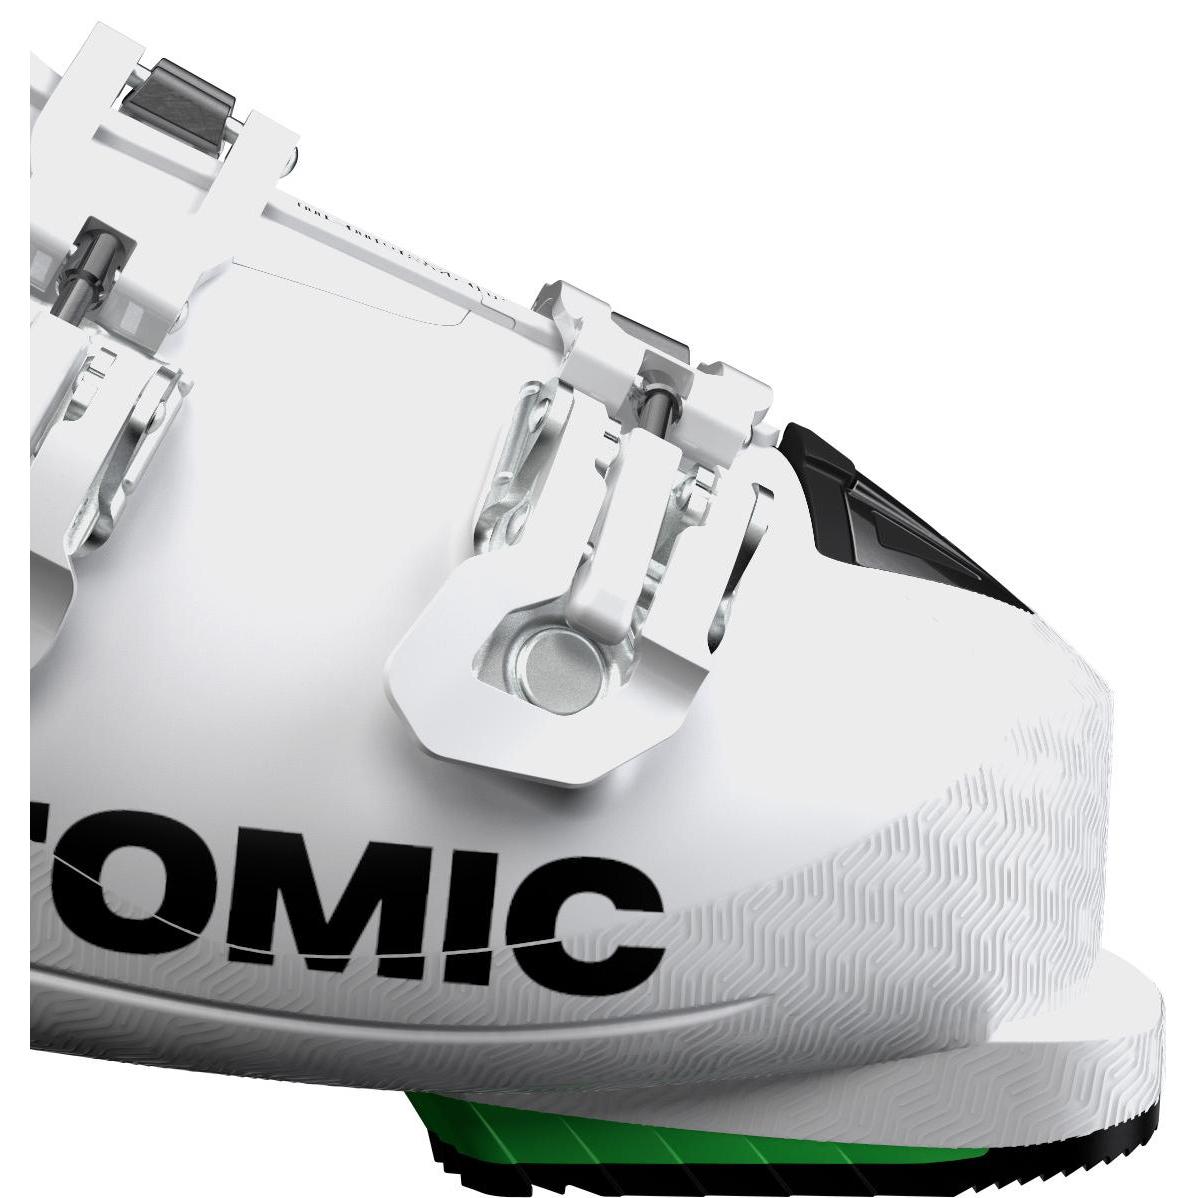 Горнолыжные ботинки ATOMIC HAWX ULTRA 120 White/Green